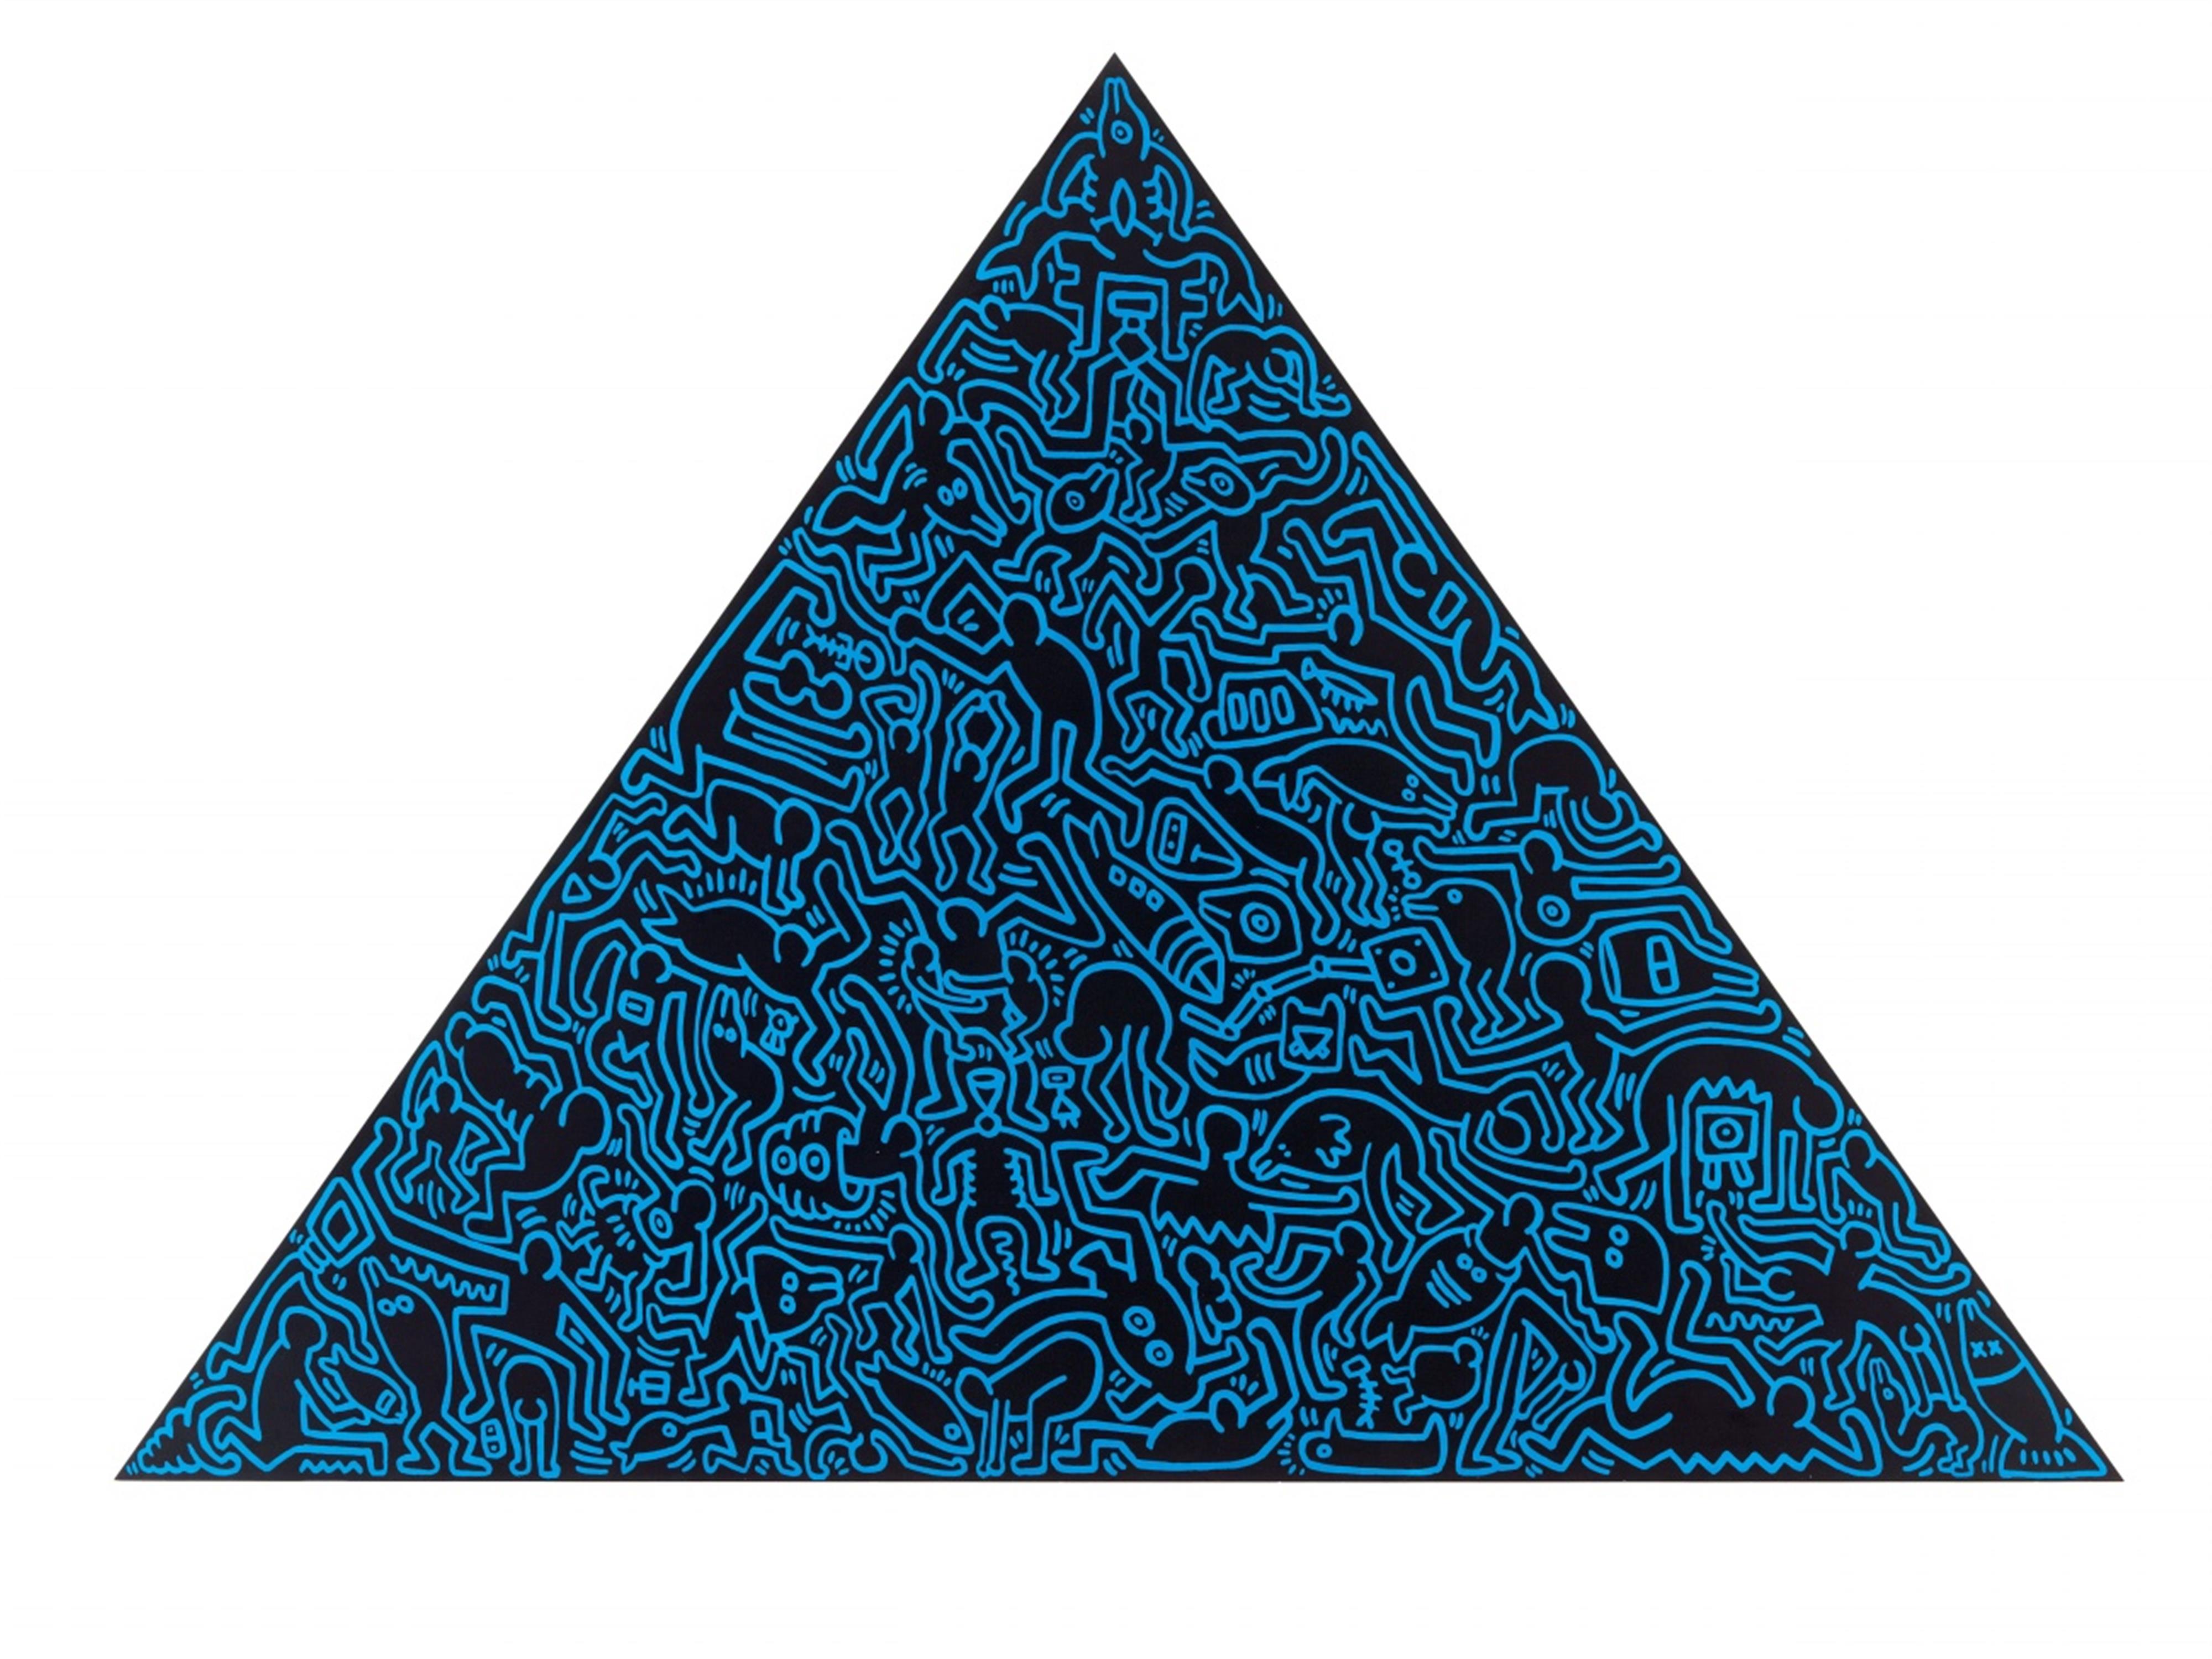 Keith Haring - Aus: Pyramid - image-1